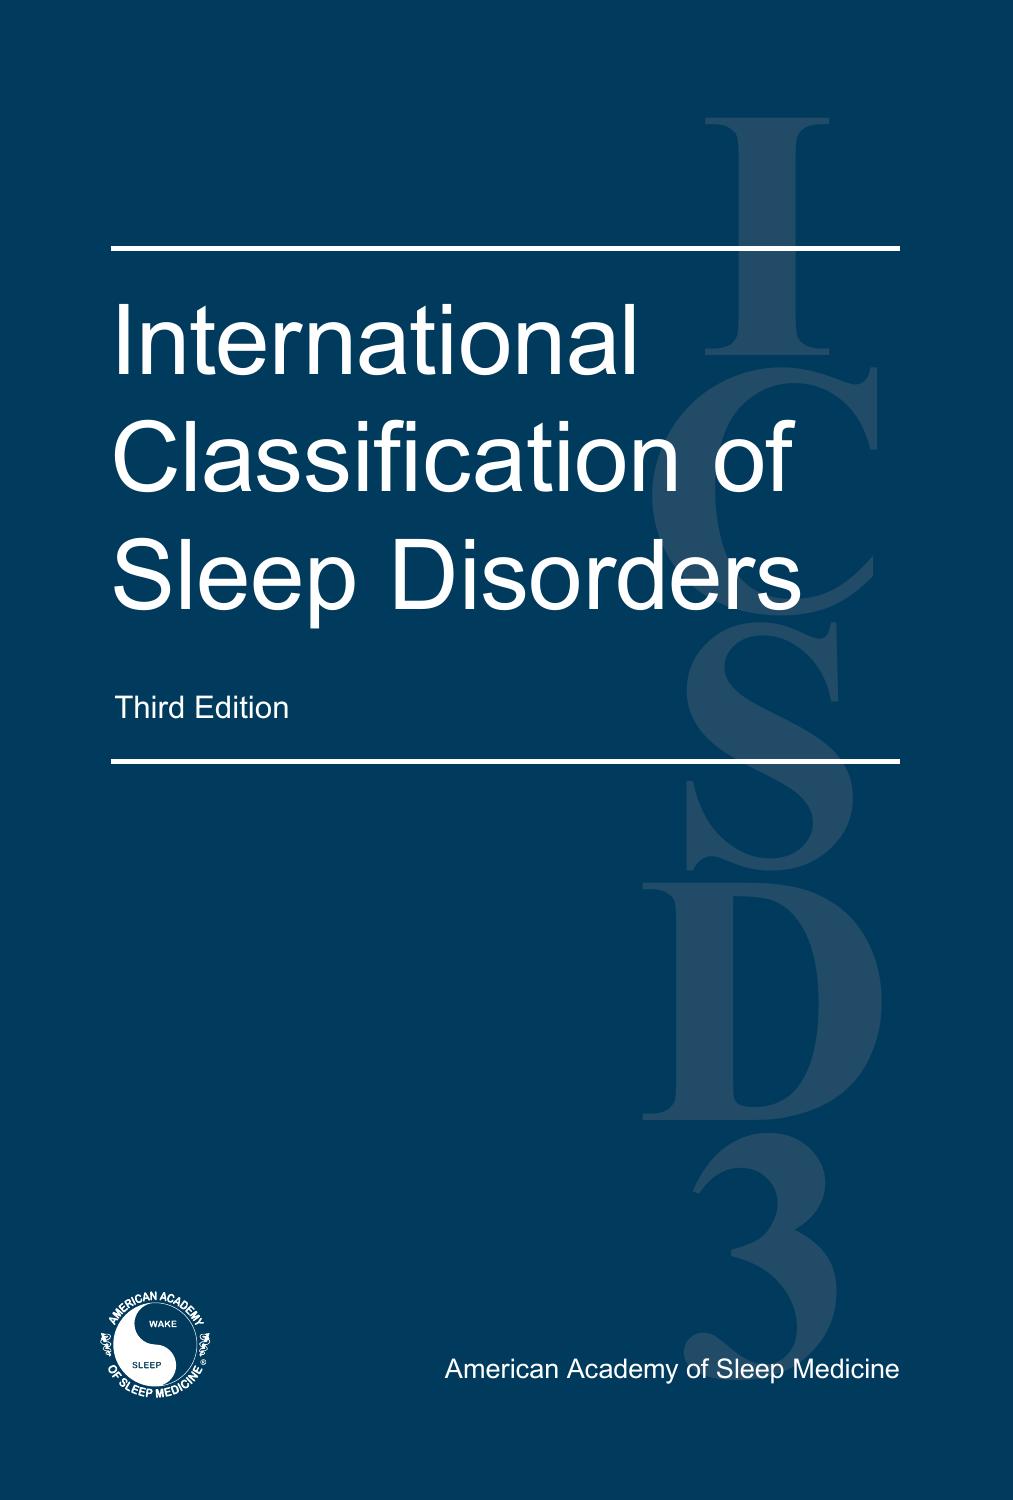 International Classification of Sleep Disorders by American Academy of Sleep Medicine